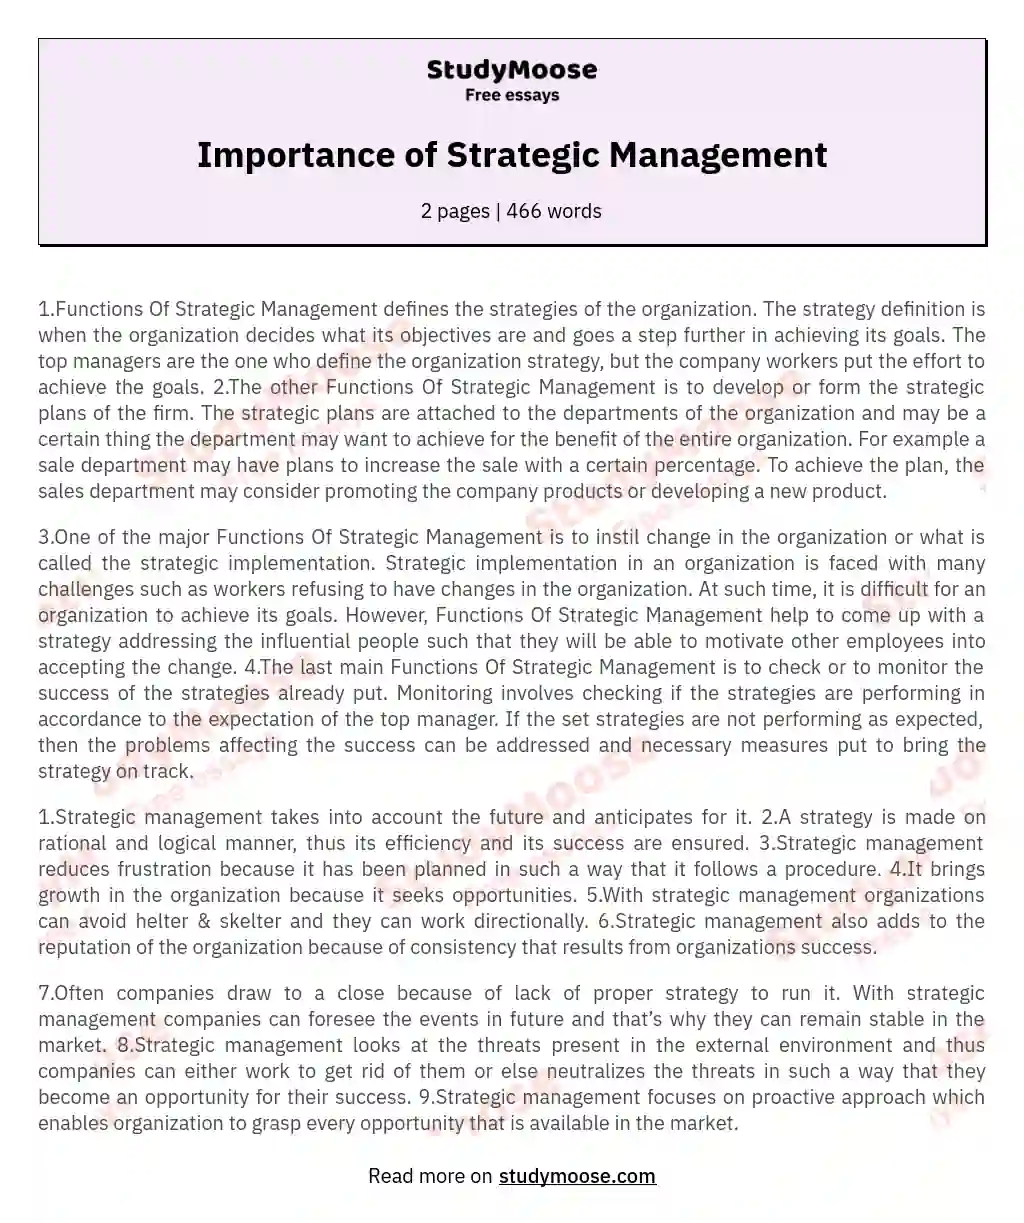 Importance of Strategic Management